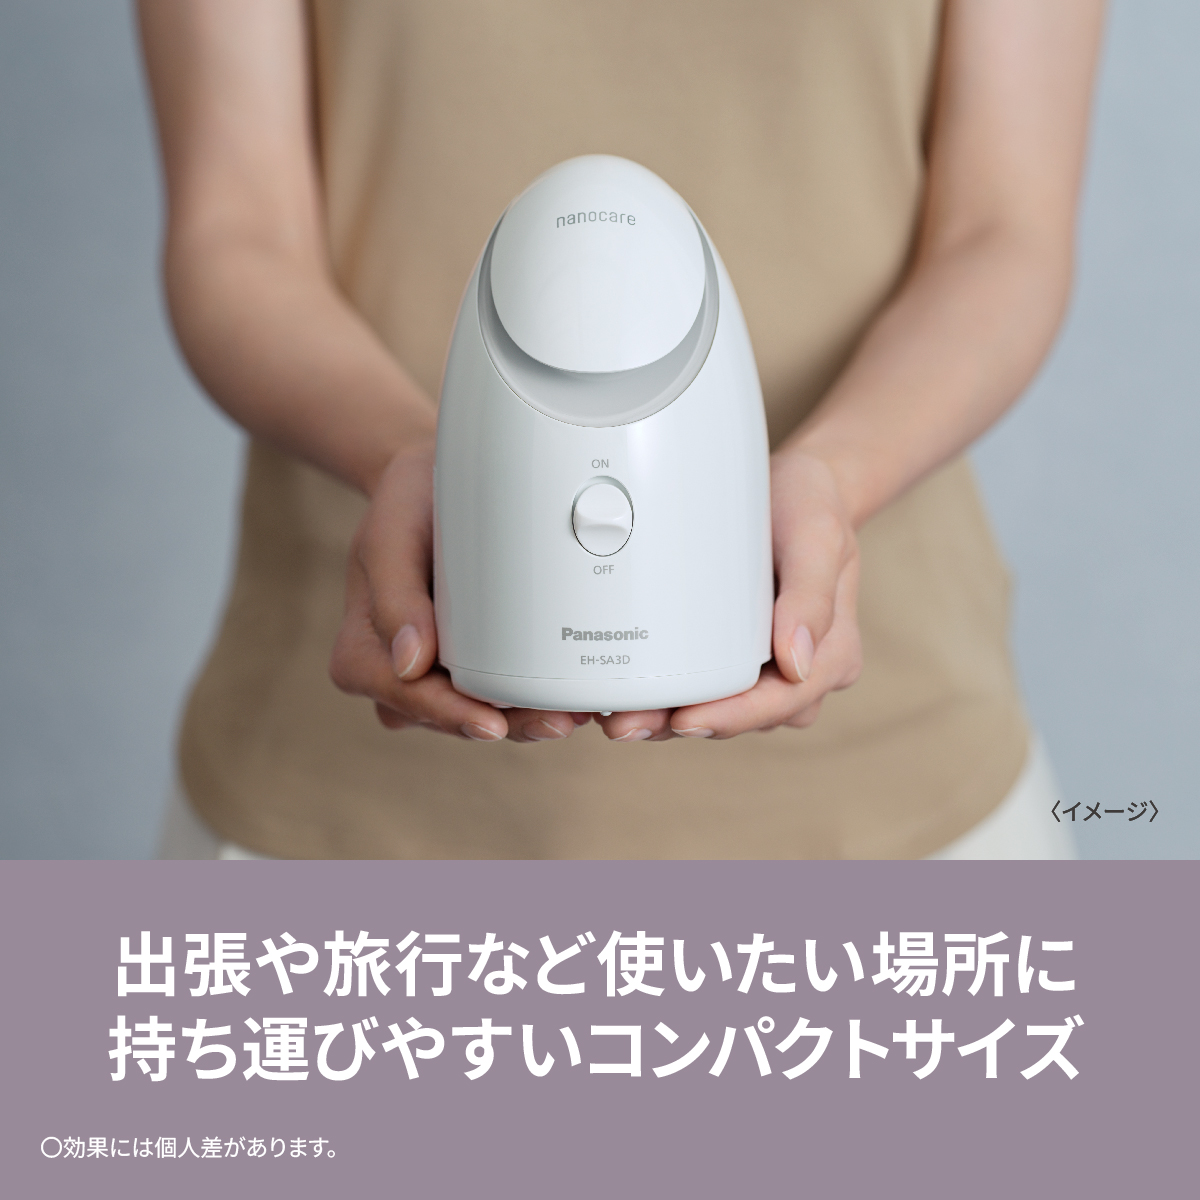 Panasonic スチーマーナノケア - 美容家電